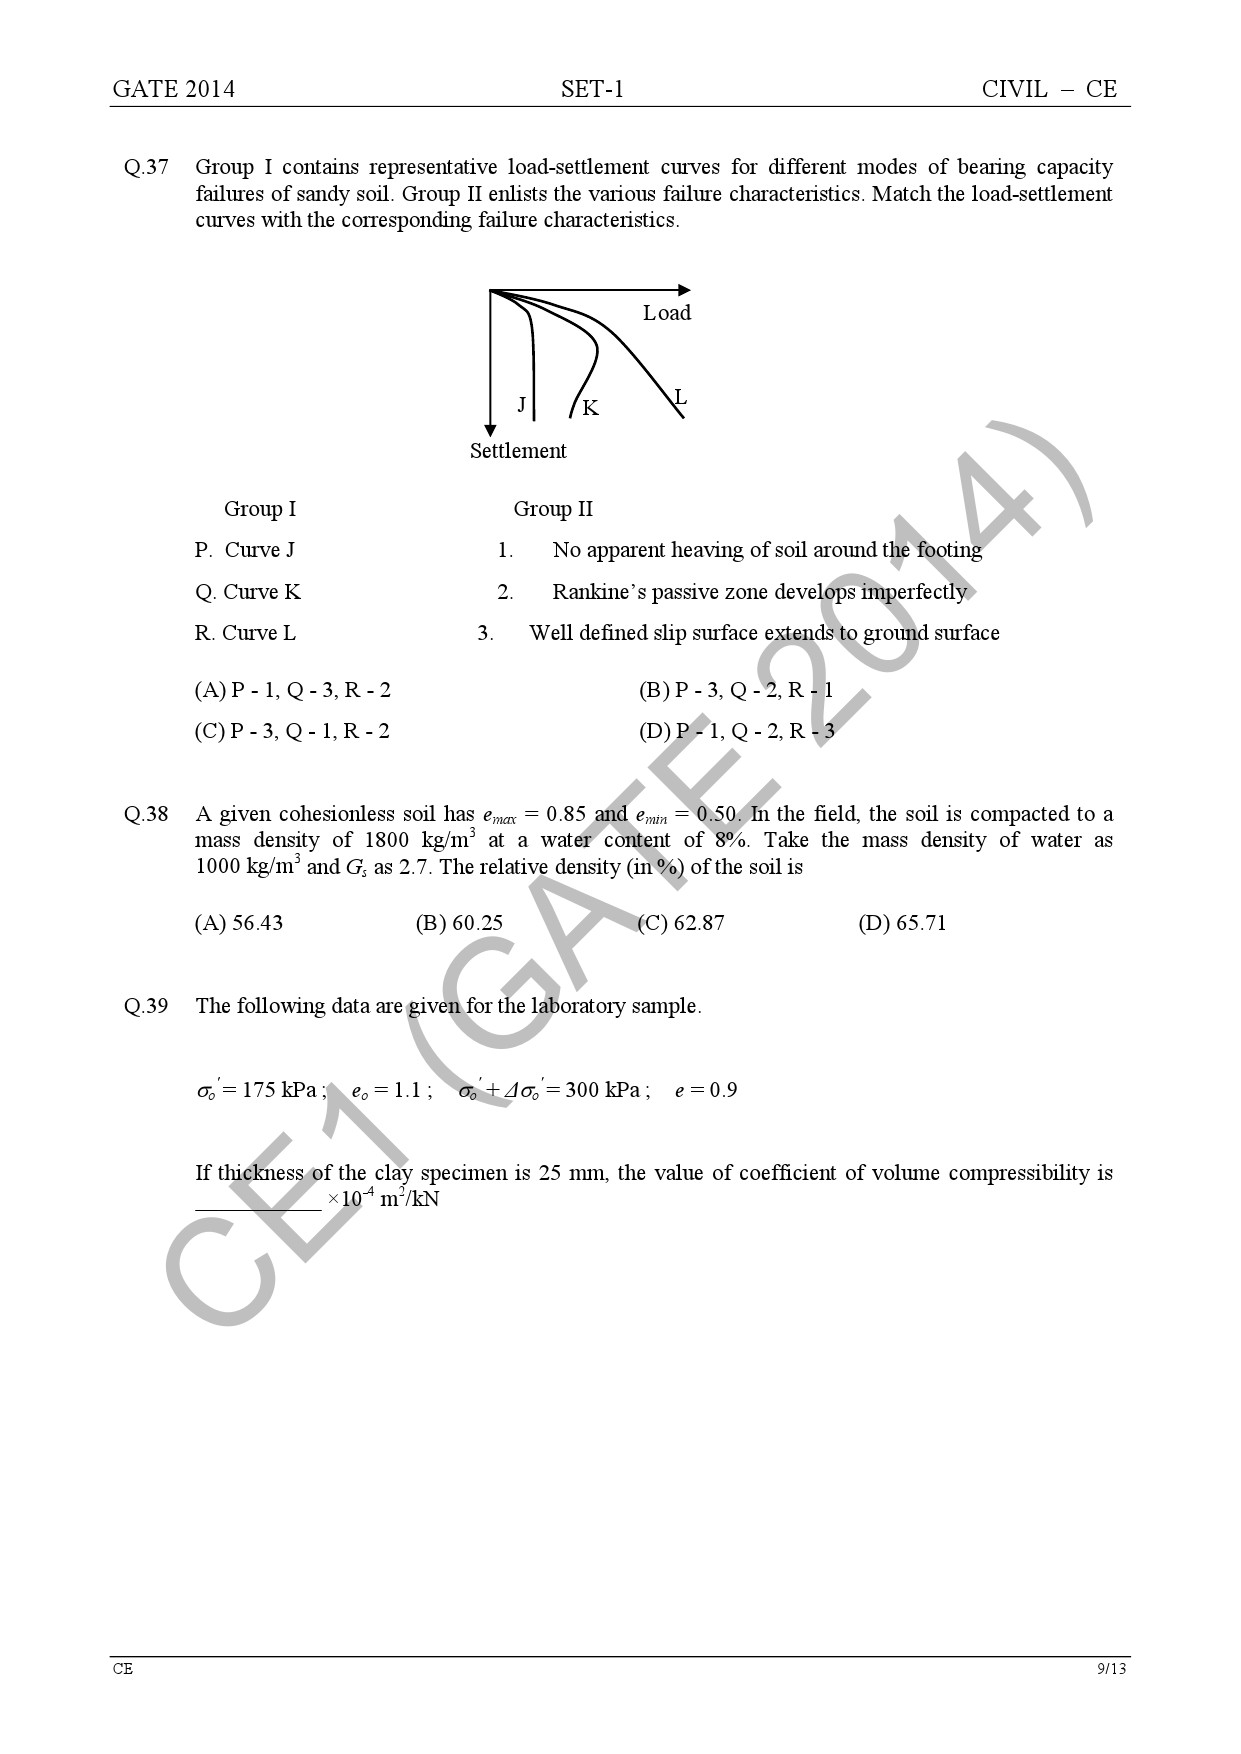 GATE Exam Question Paper 2014 Civil Engineering Set 1 15